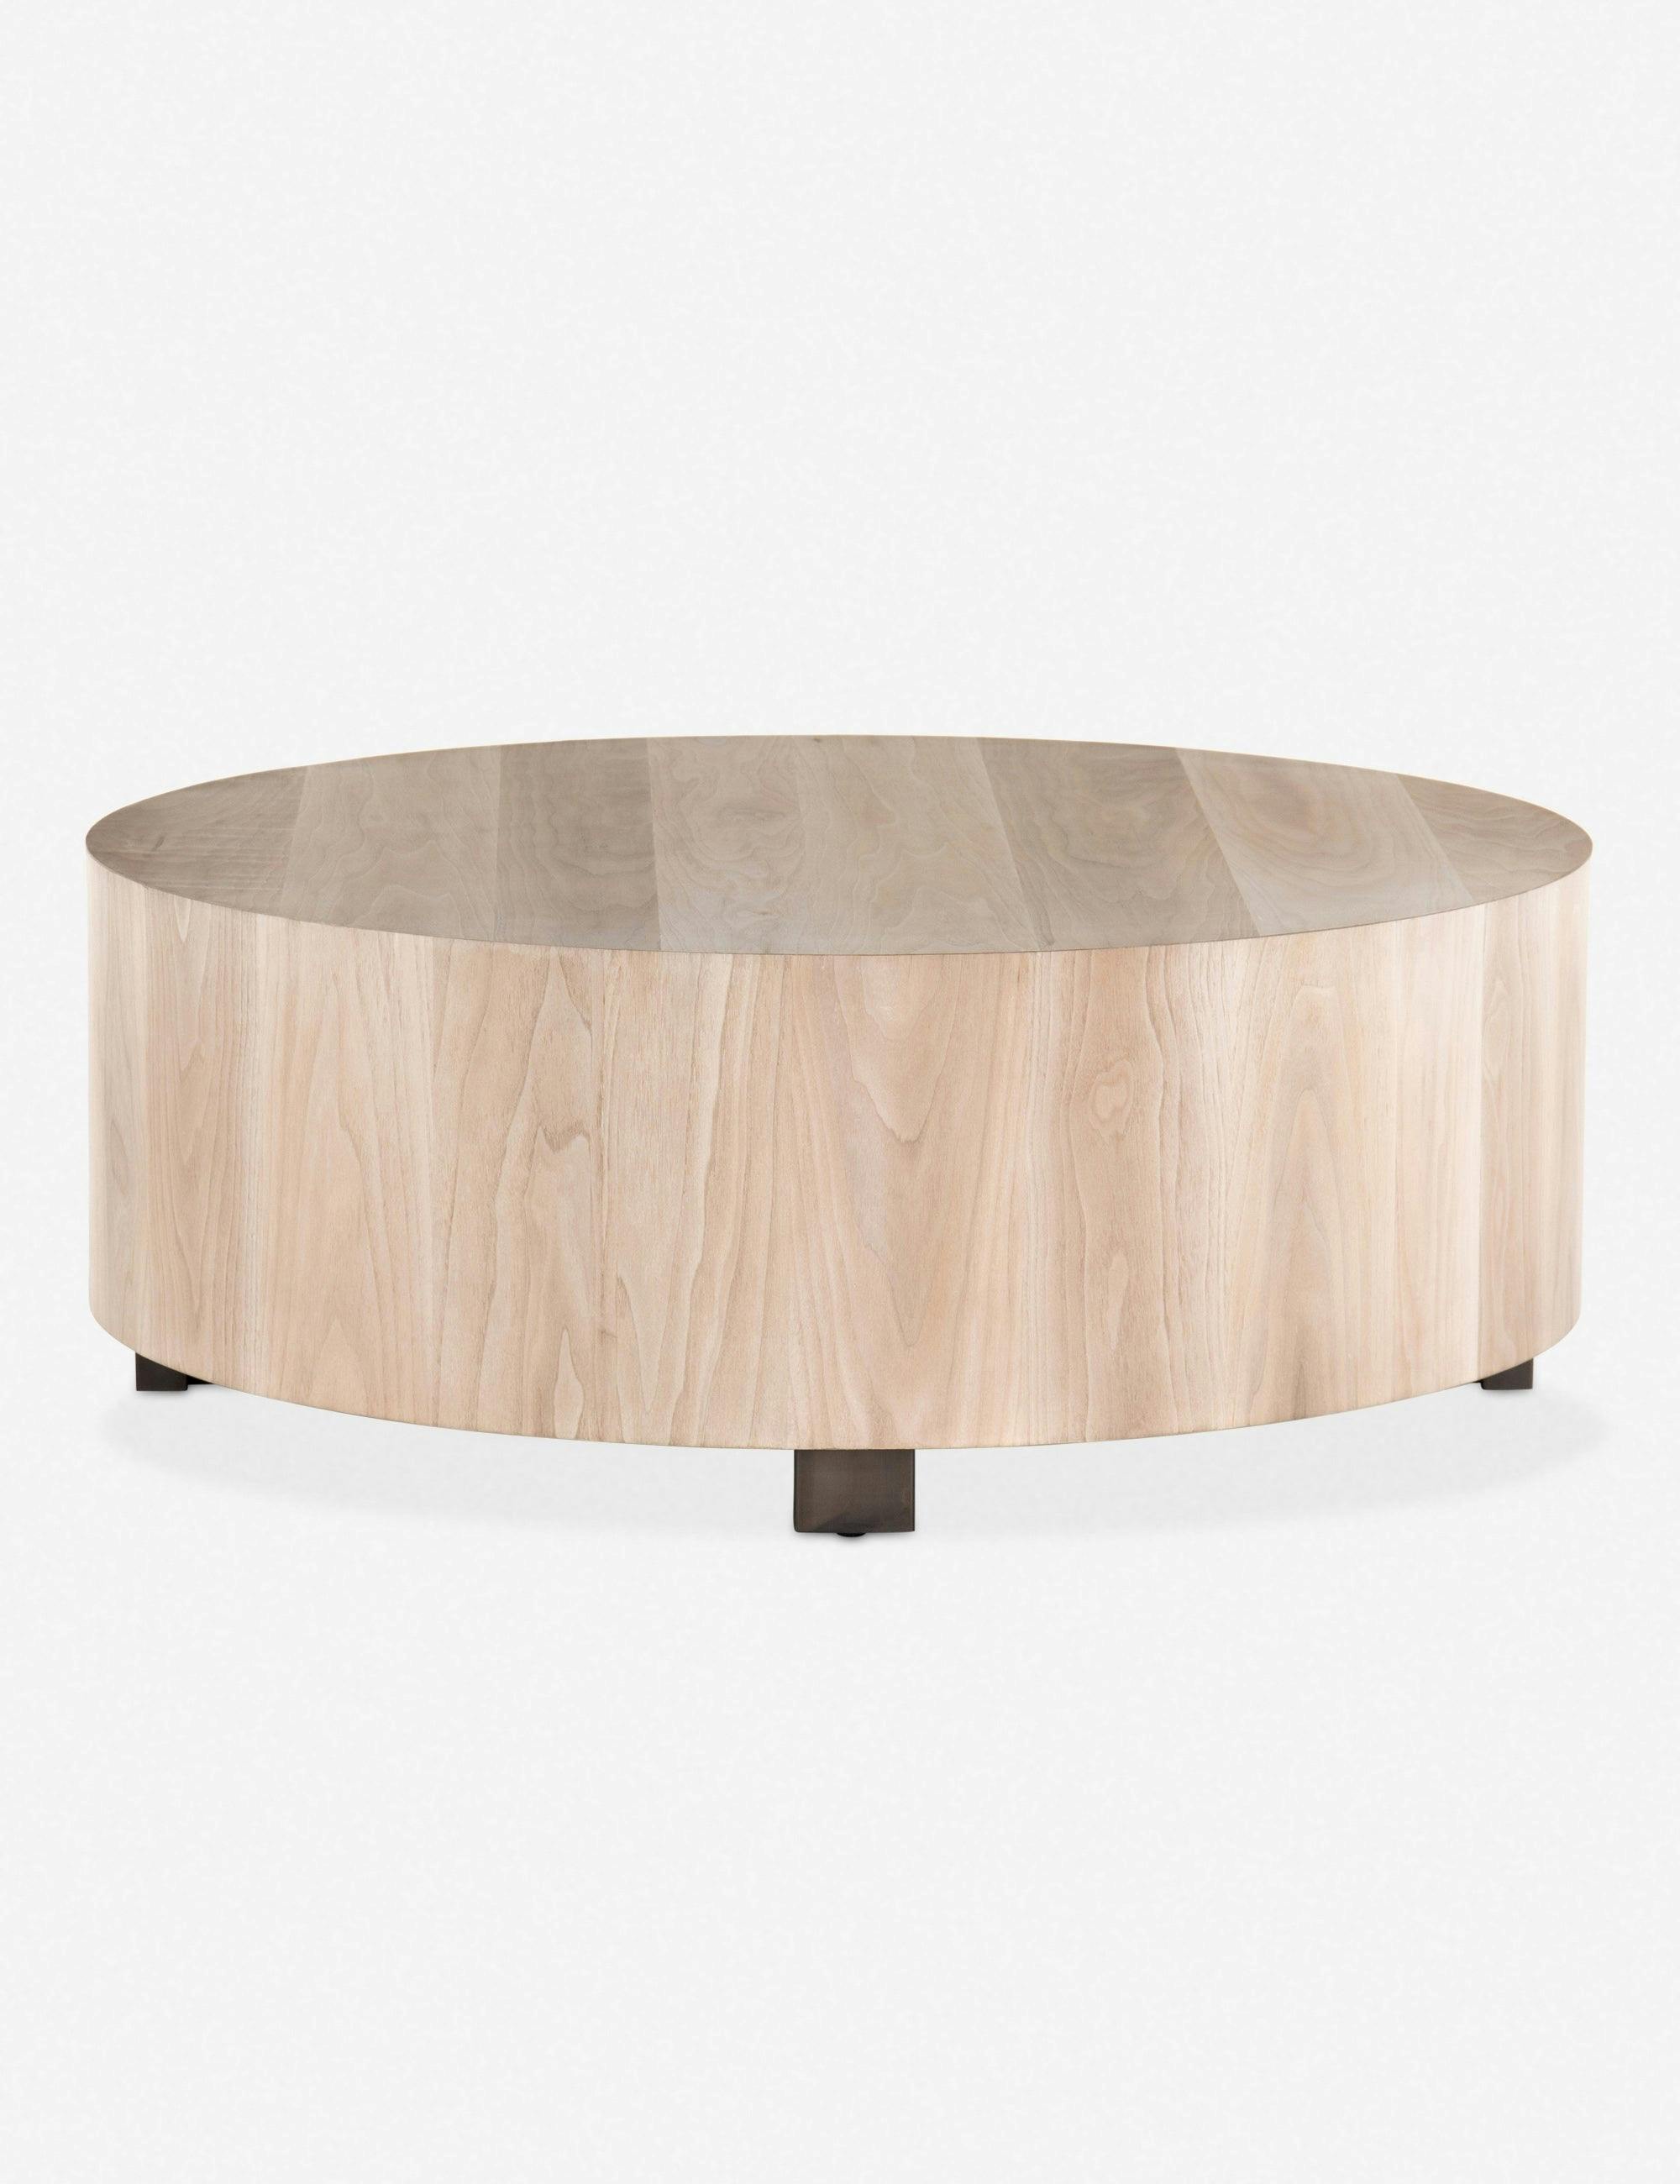 Contemporary Cream Wood Round Coffee Table, 40" Diameter